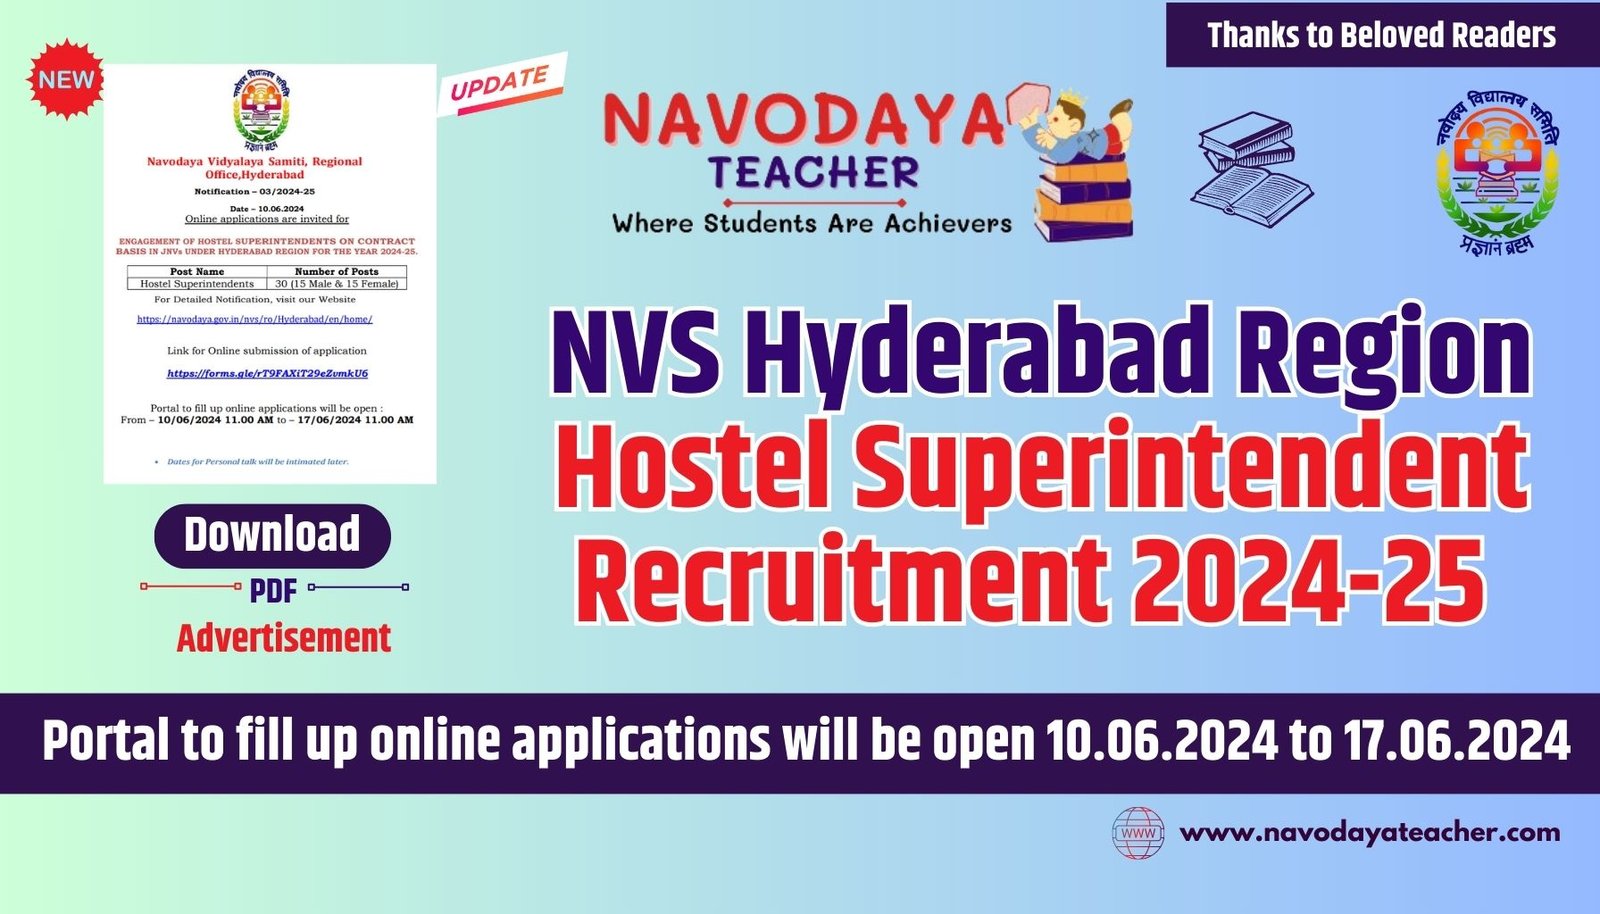 Hostel Superintendent Recruitment in NVS Hyderabad Region 2024-25